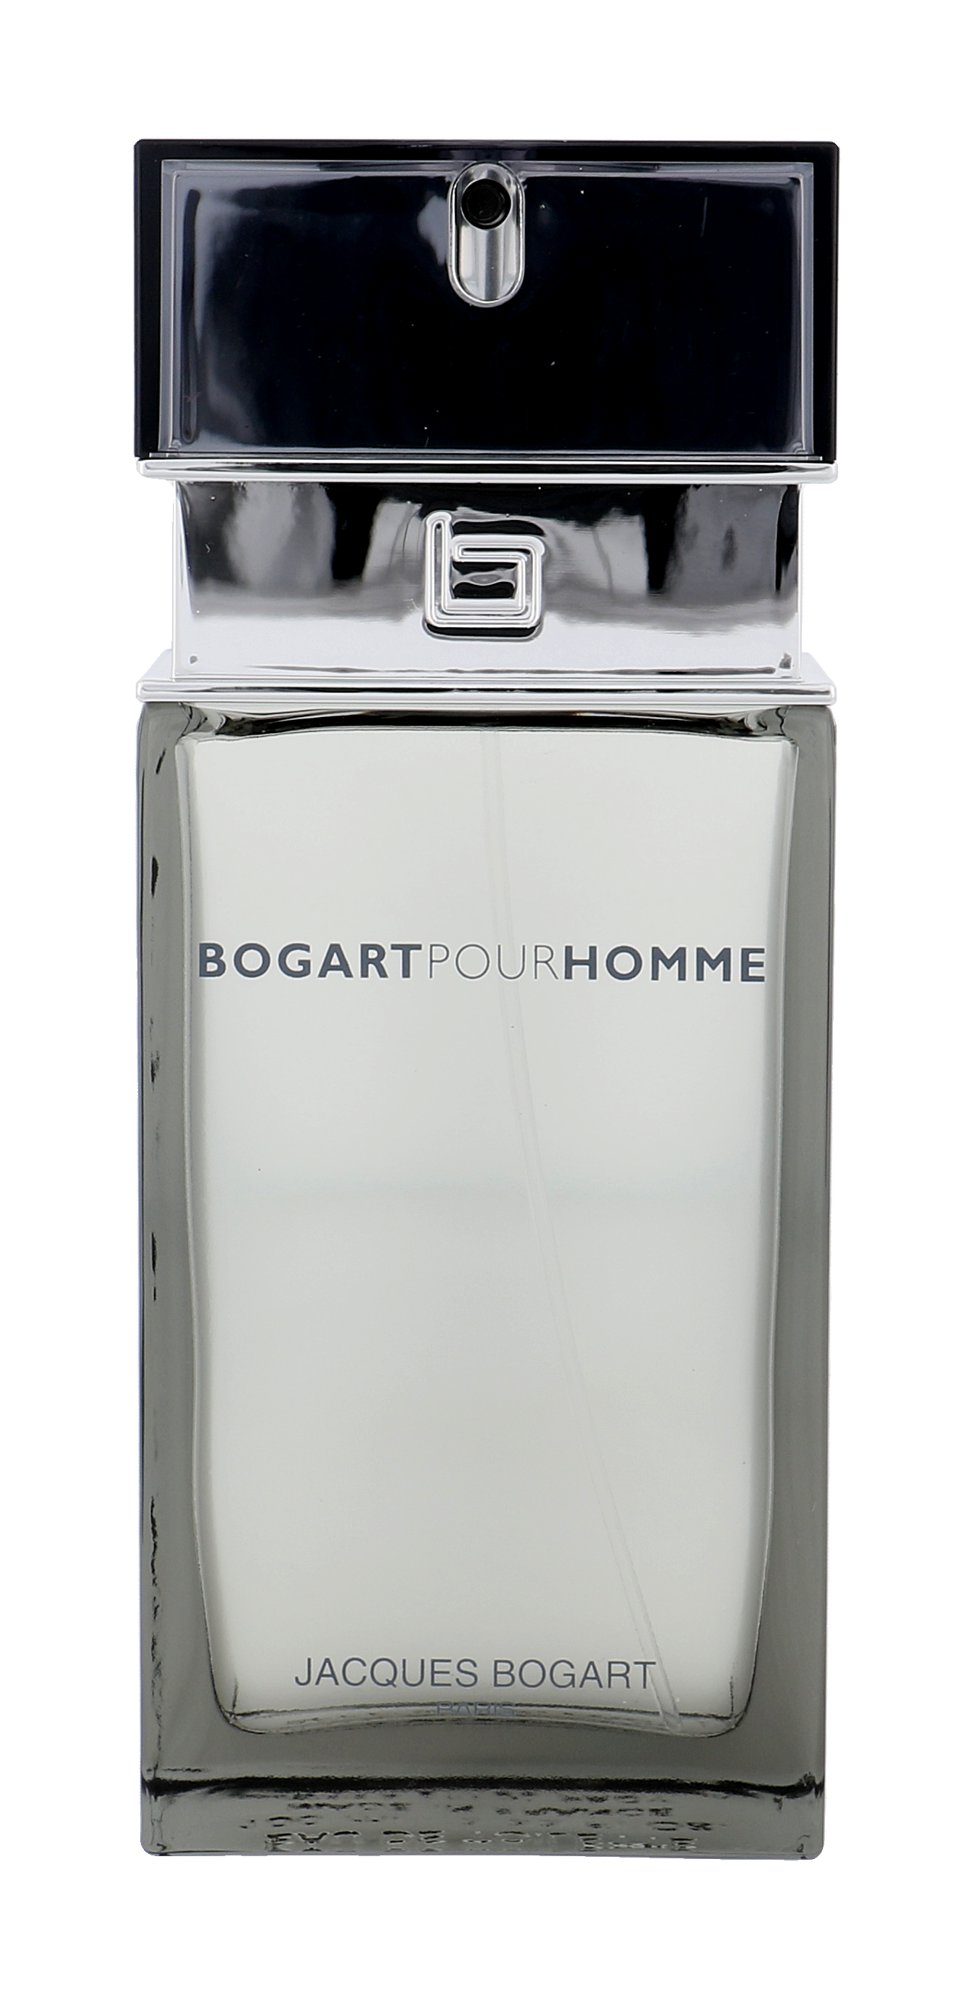 Jacques Bogart Bogart Pour Homme, Toaletní voda 100ml - Tester